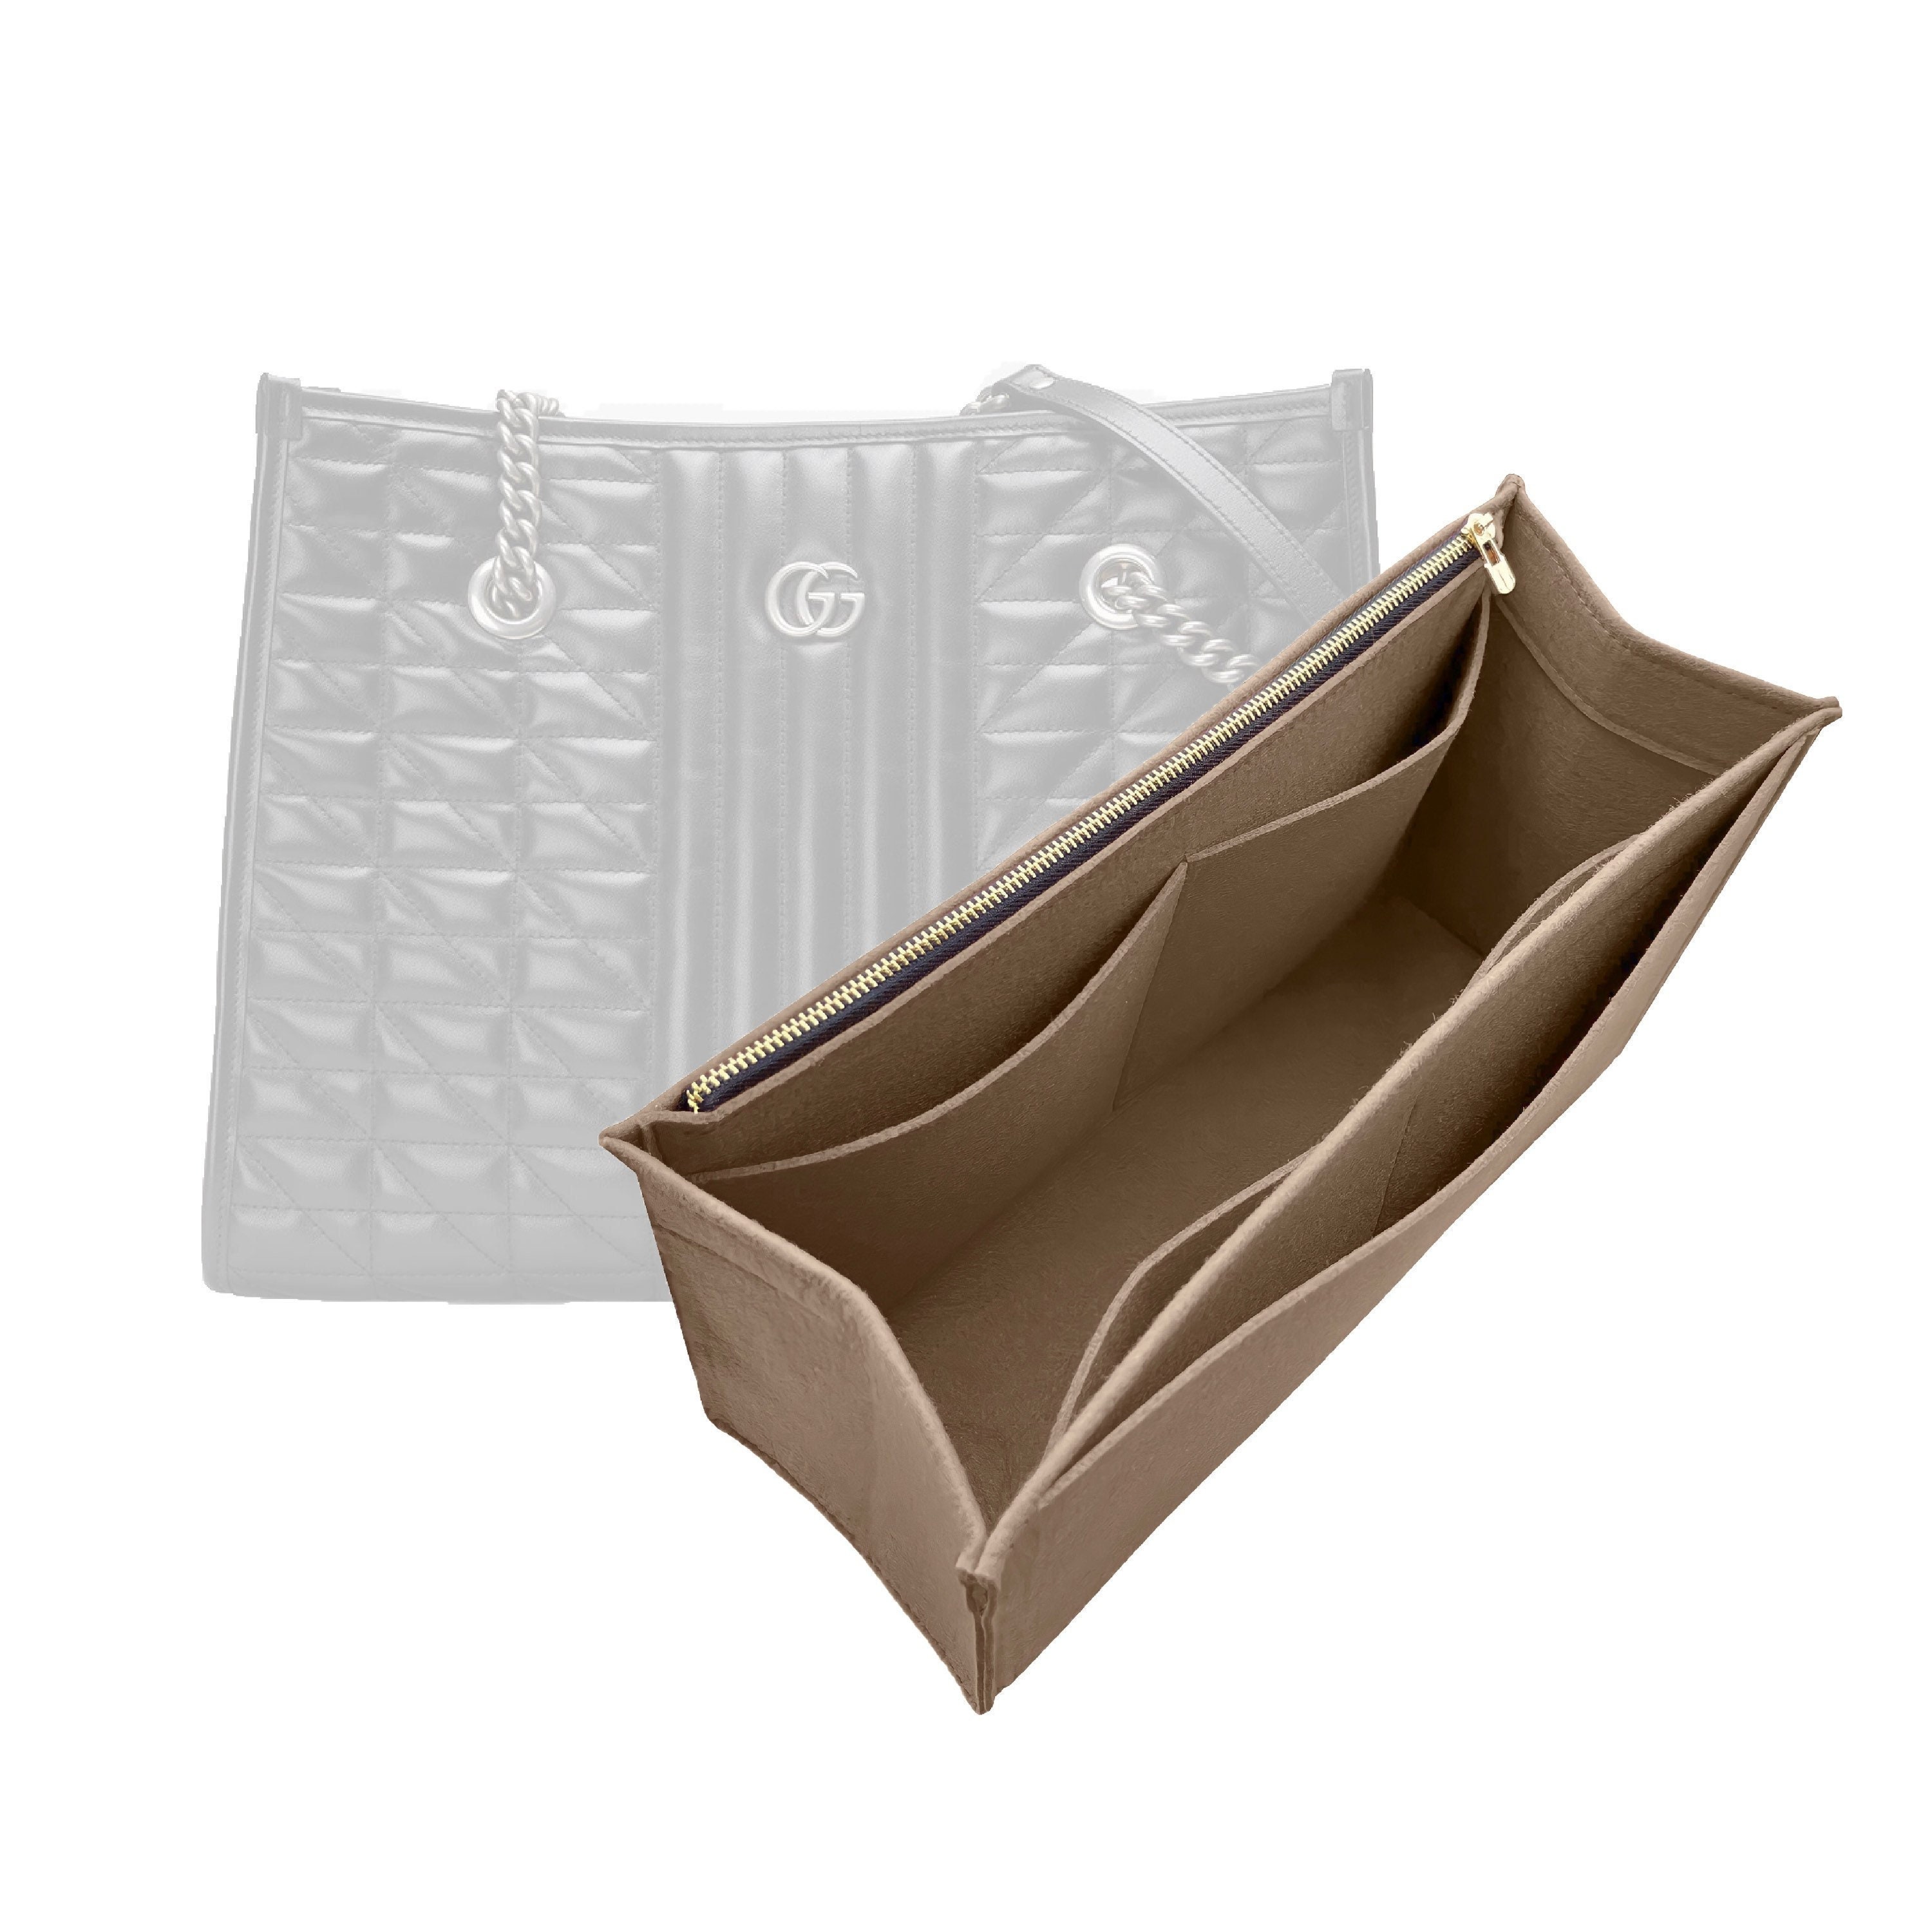 Marmont Medium Tote Bag Organizer with Zipper Bag / Marmont Tote Insert / Handbag Storage Purse Liner Bag with Pocket